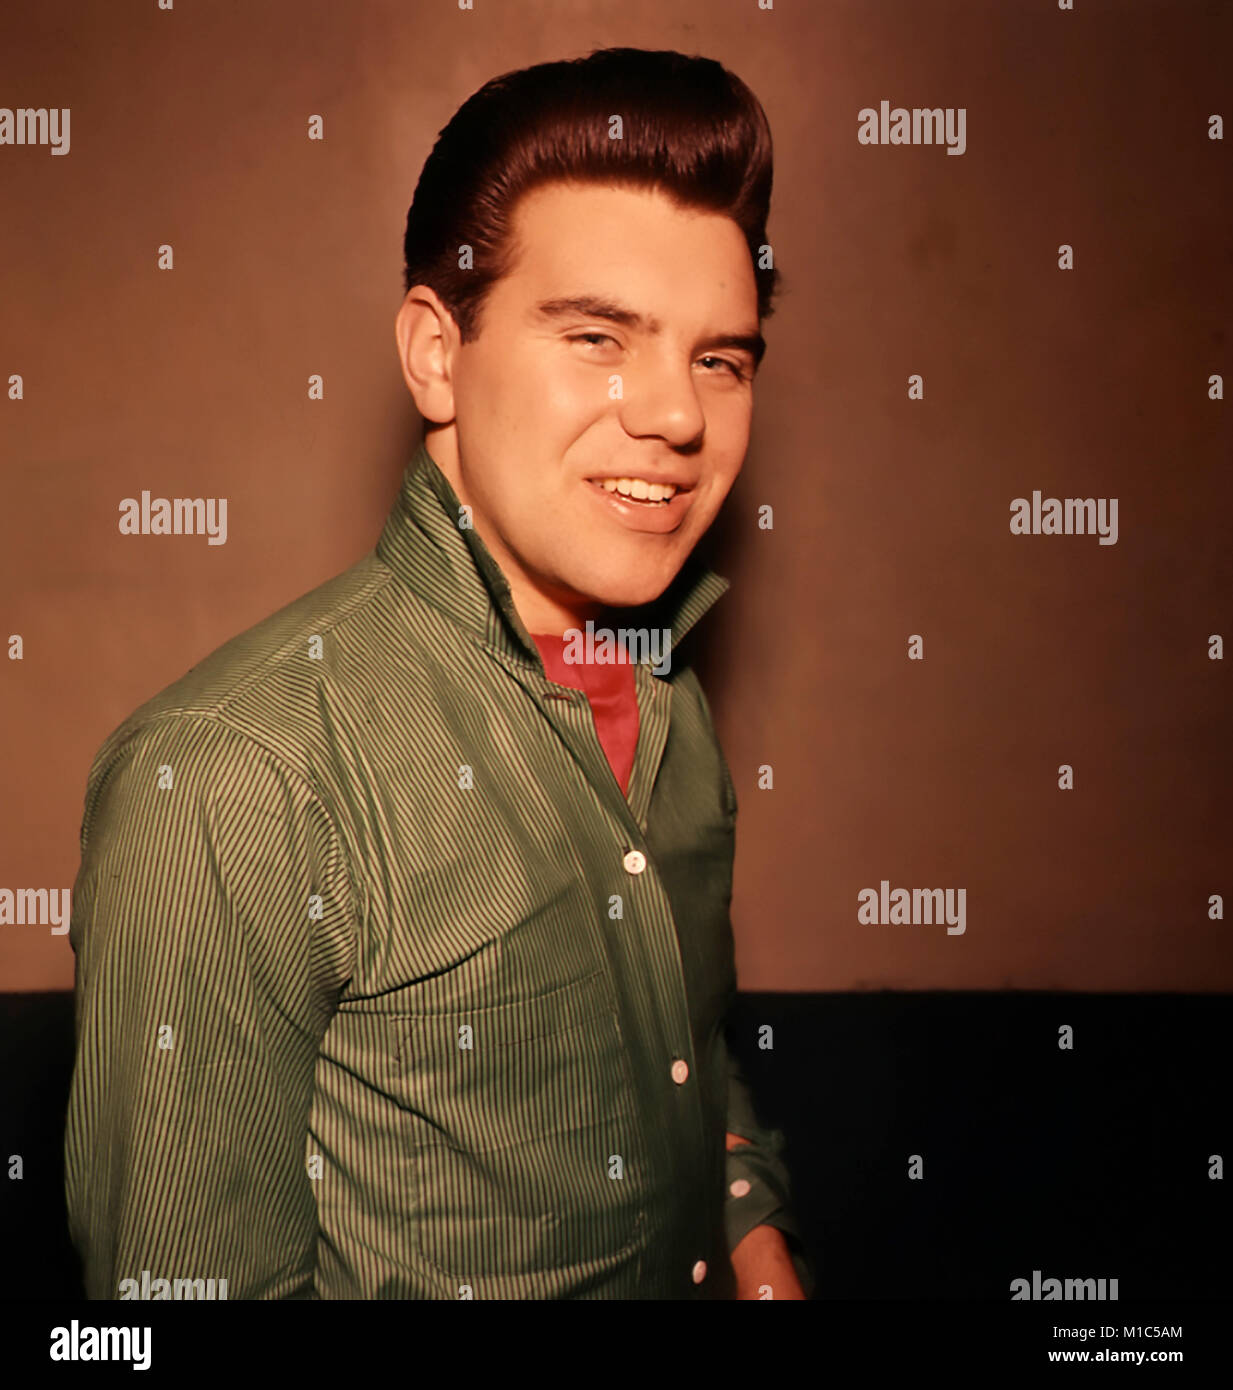 JOHNNY dolce inglese cantante pop nel 1960. Foto Stock